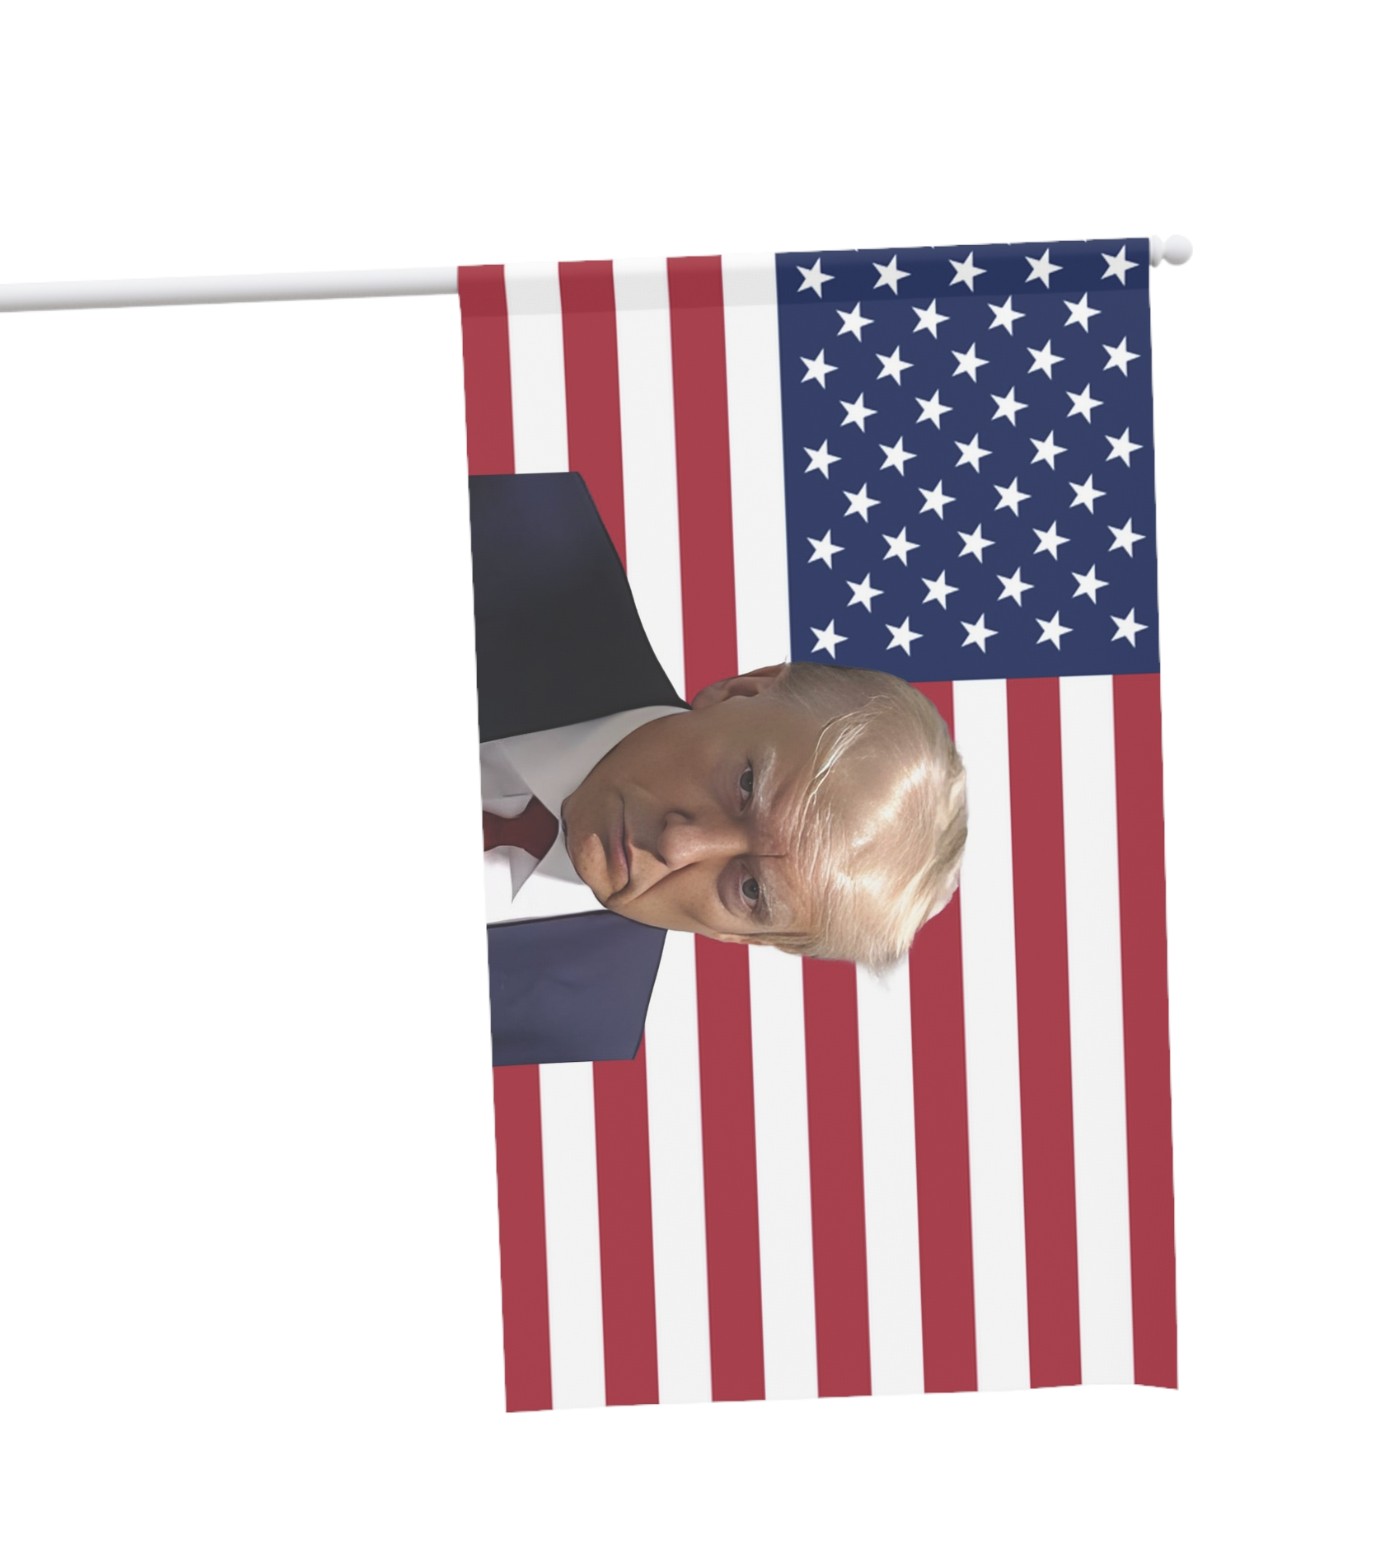 Trump 2024 mug shot on the American flag